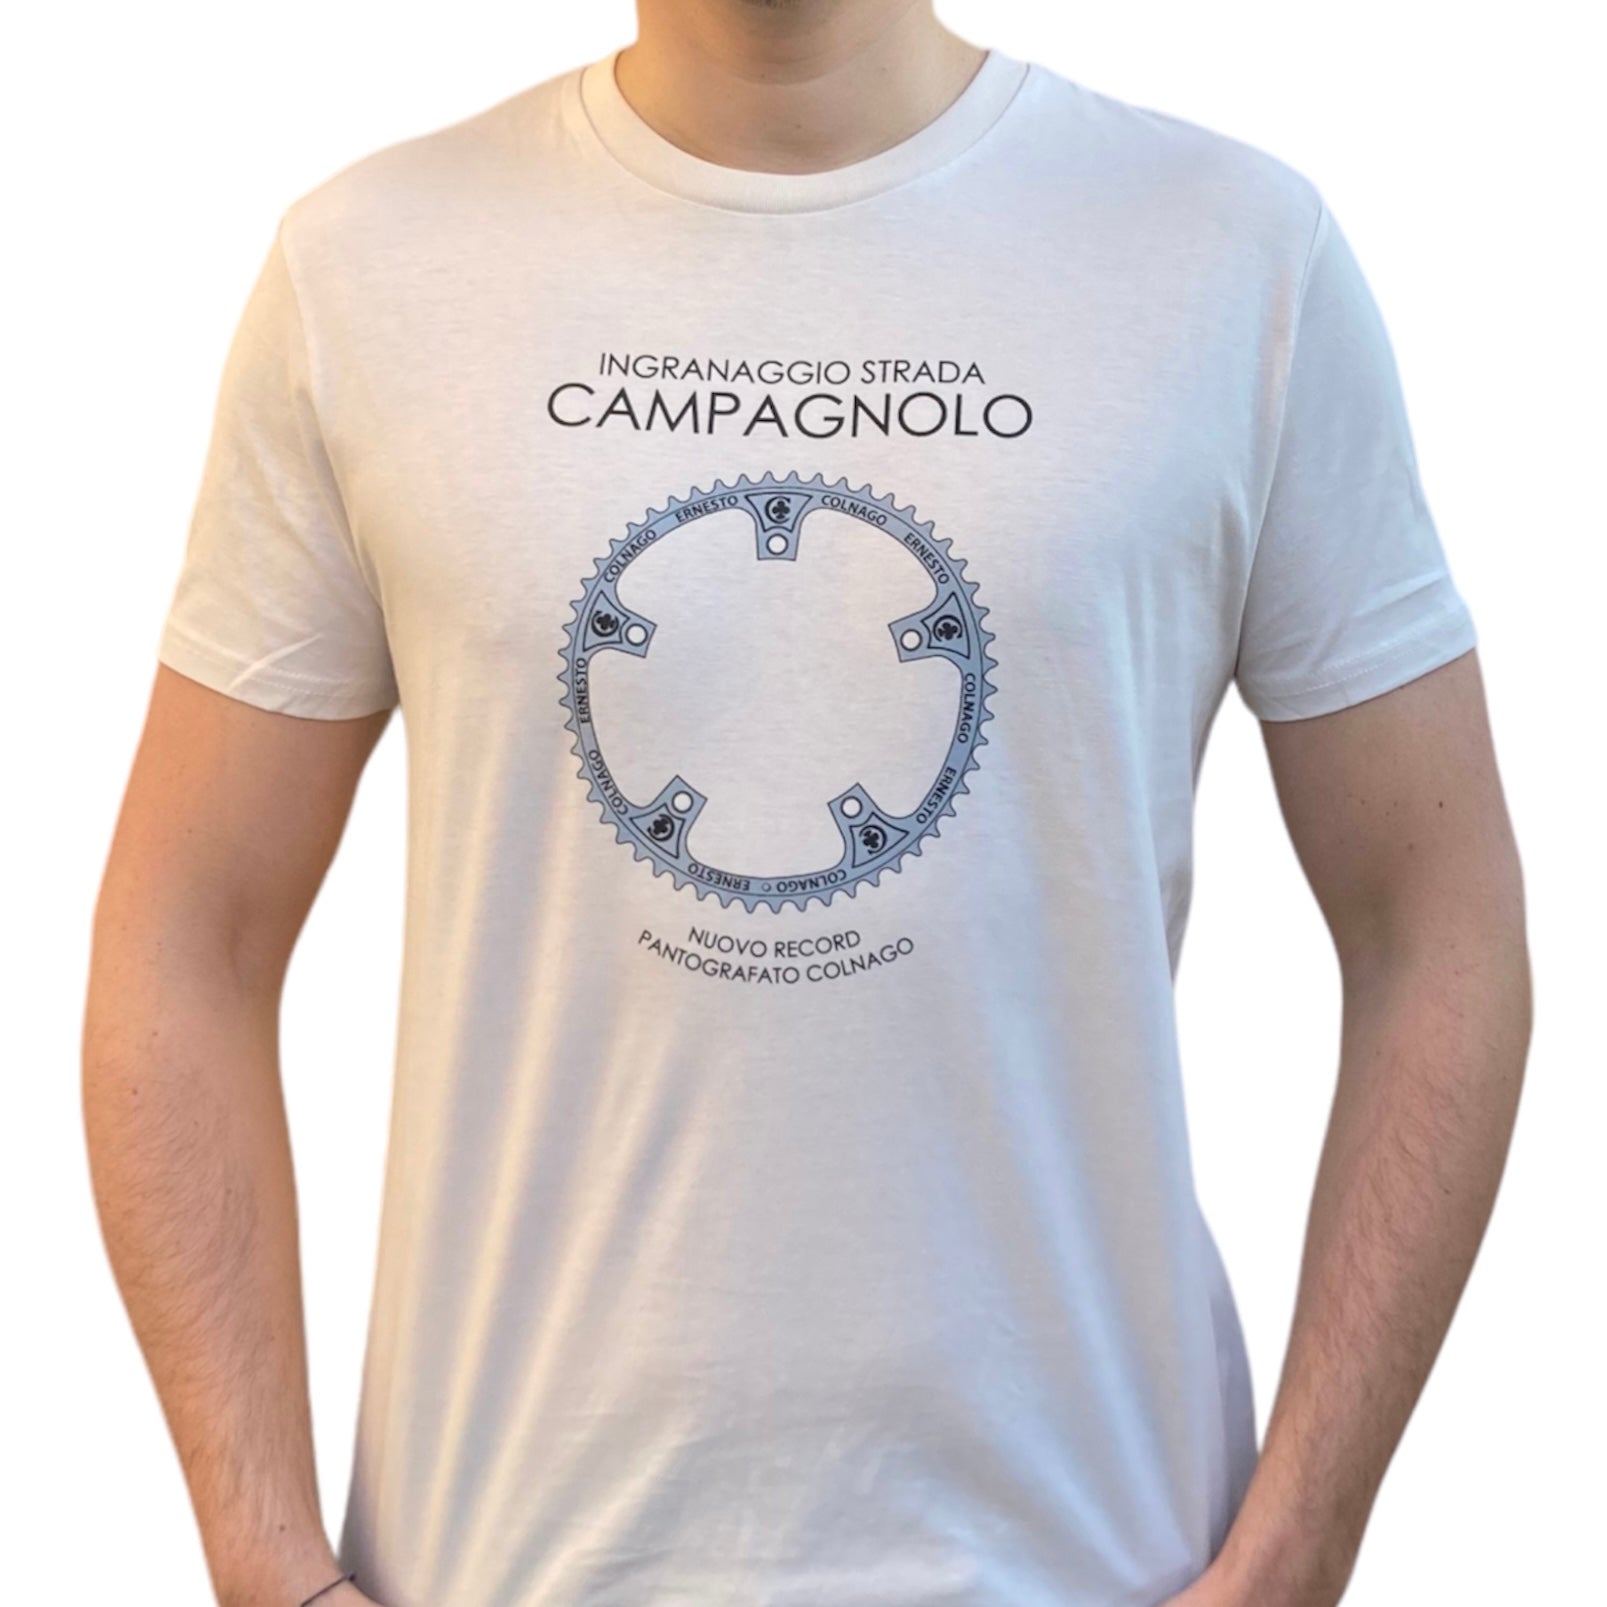 Gedehams Forinden Bering strædet T-shirt "Campagnolo Ingranaggio Strada by Colnago" – corsaclassic